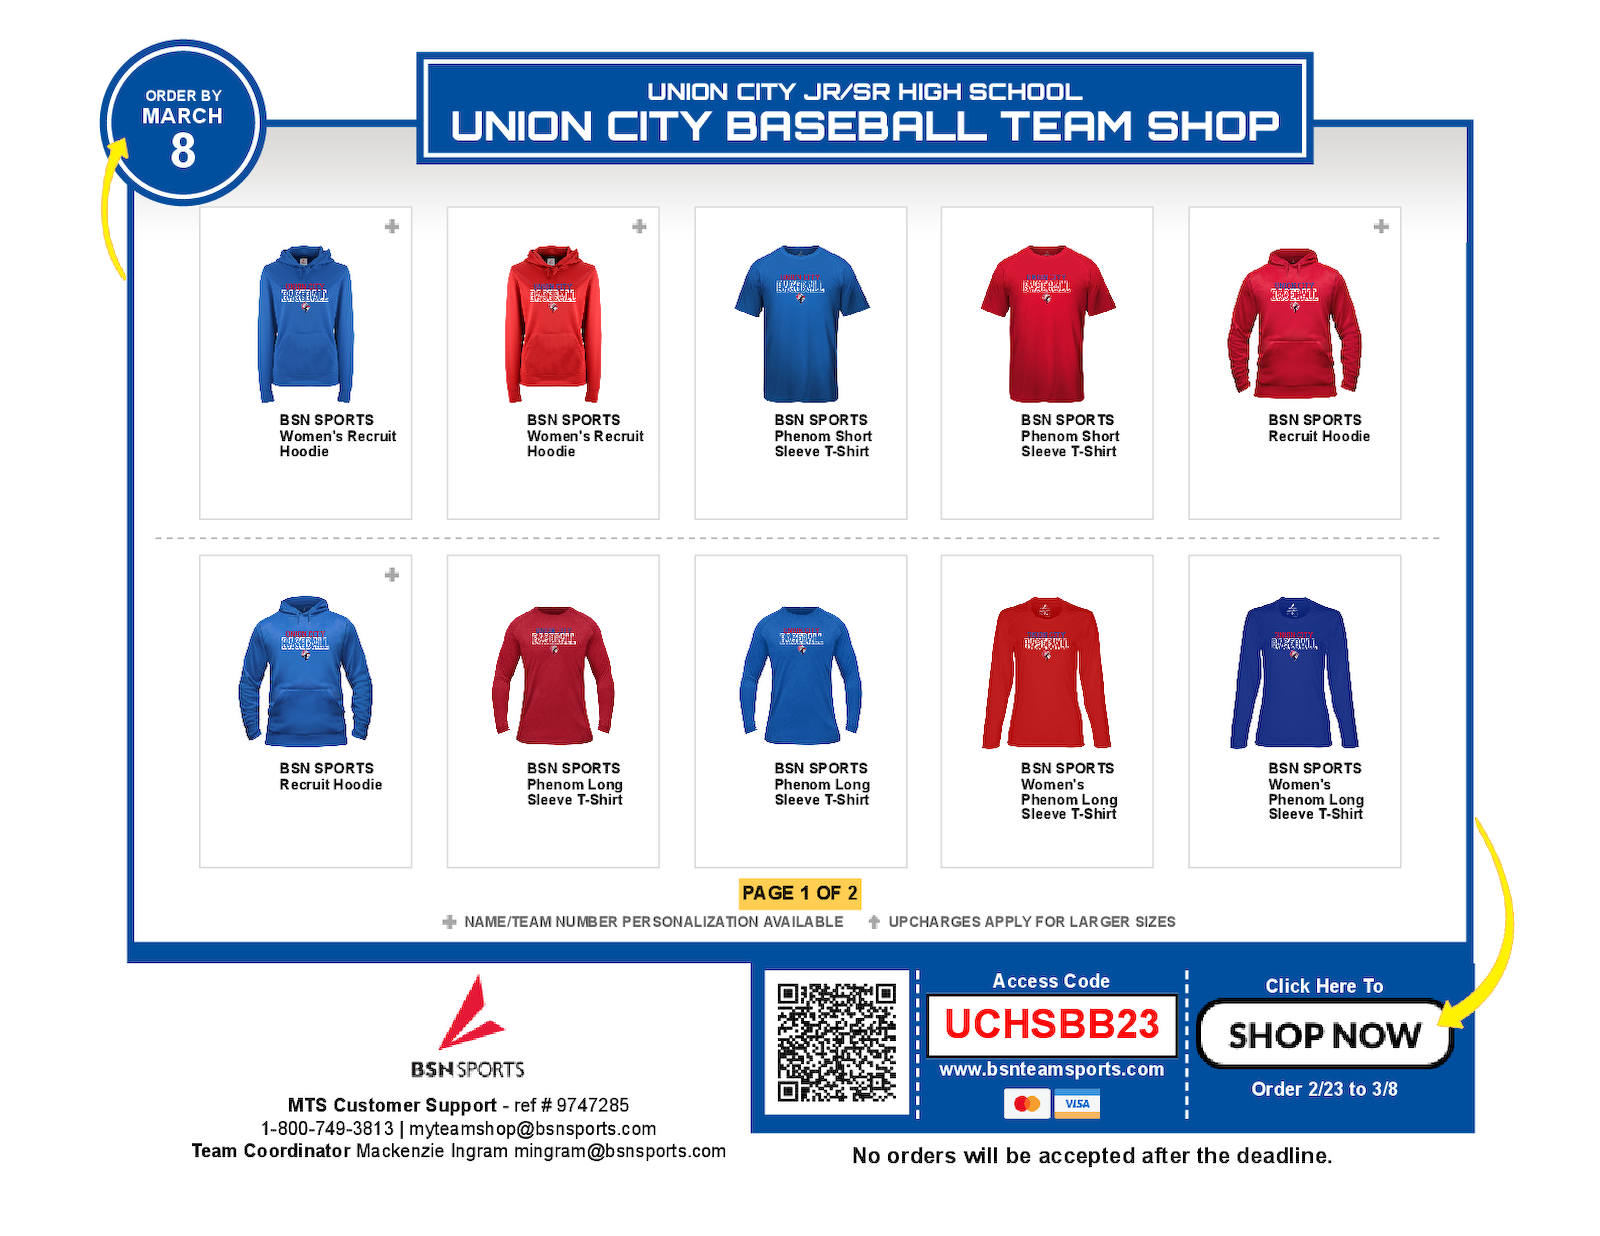 Union City Baseball Team Shop cover photo